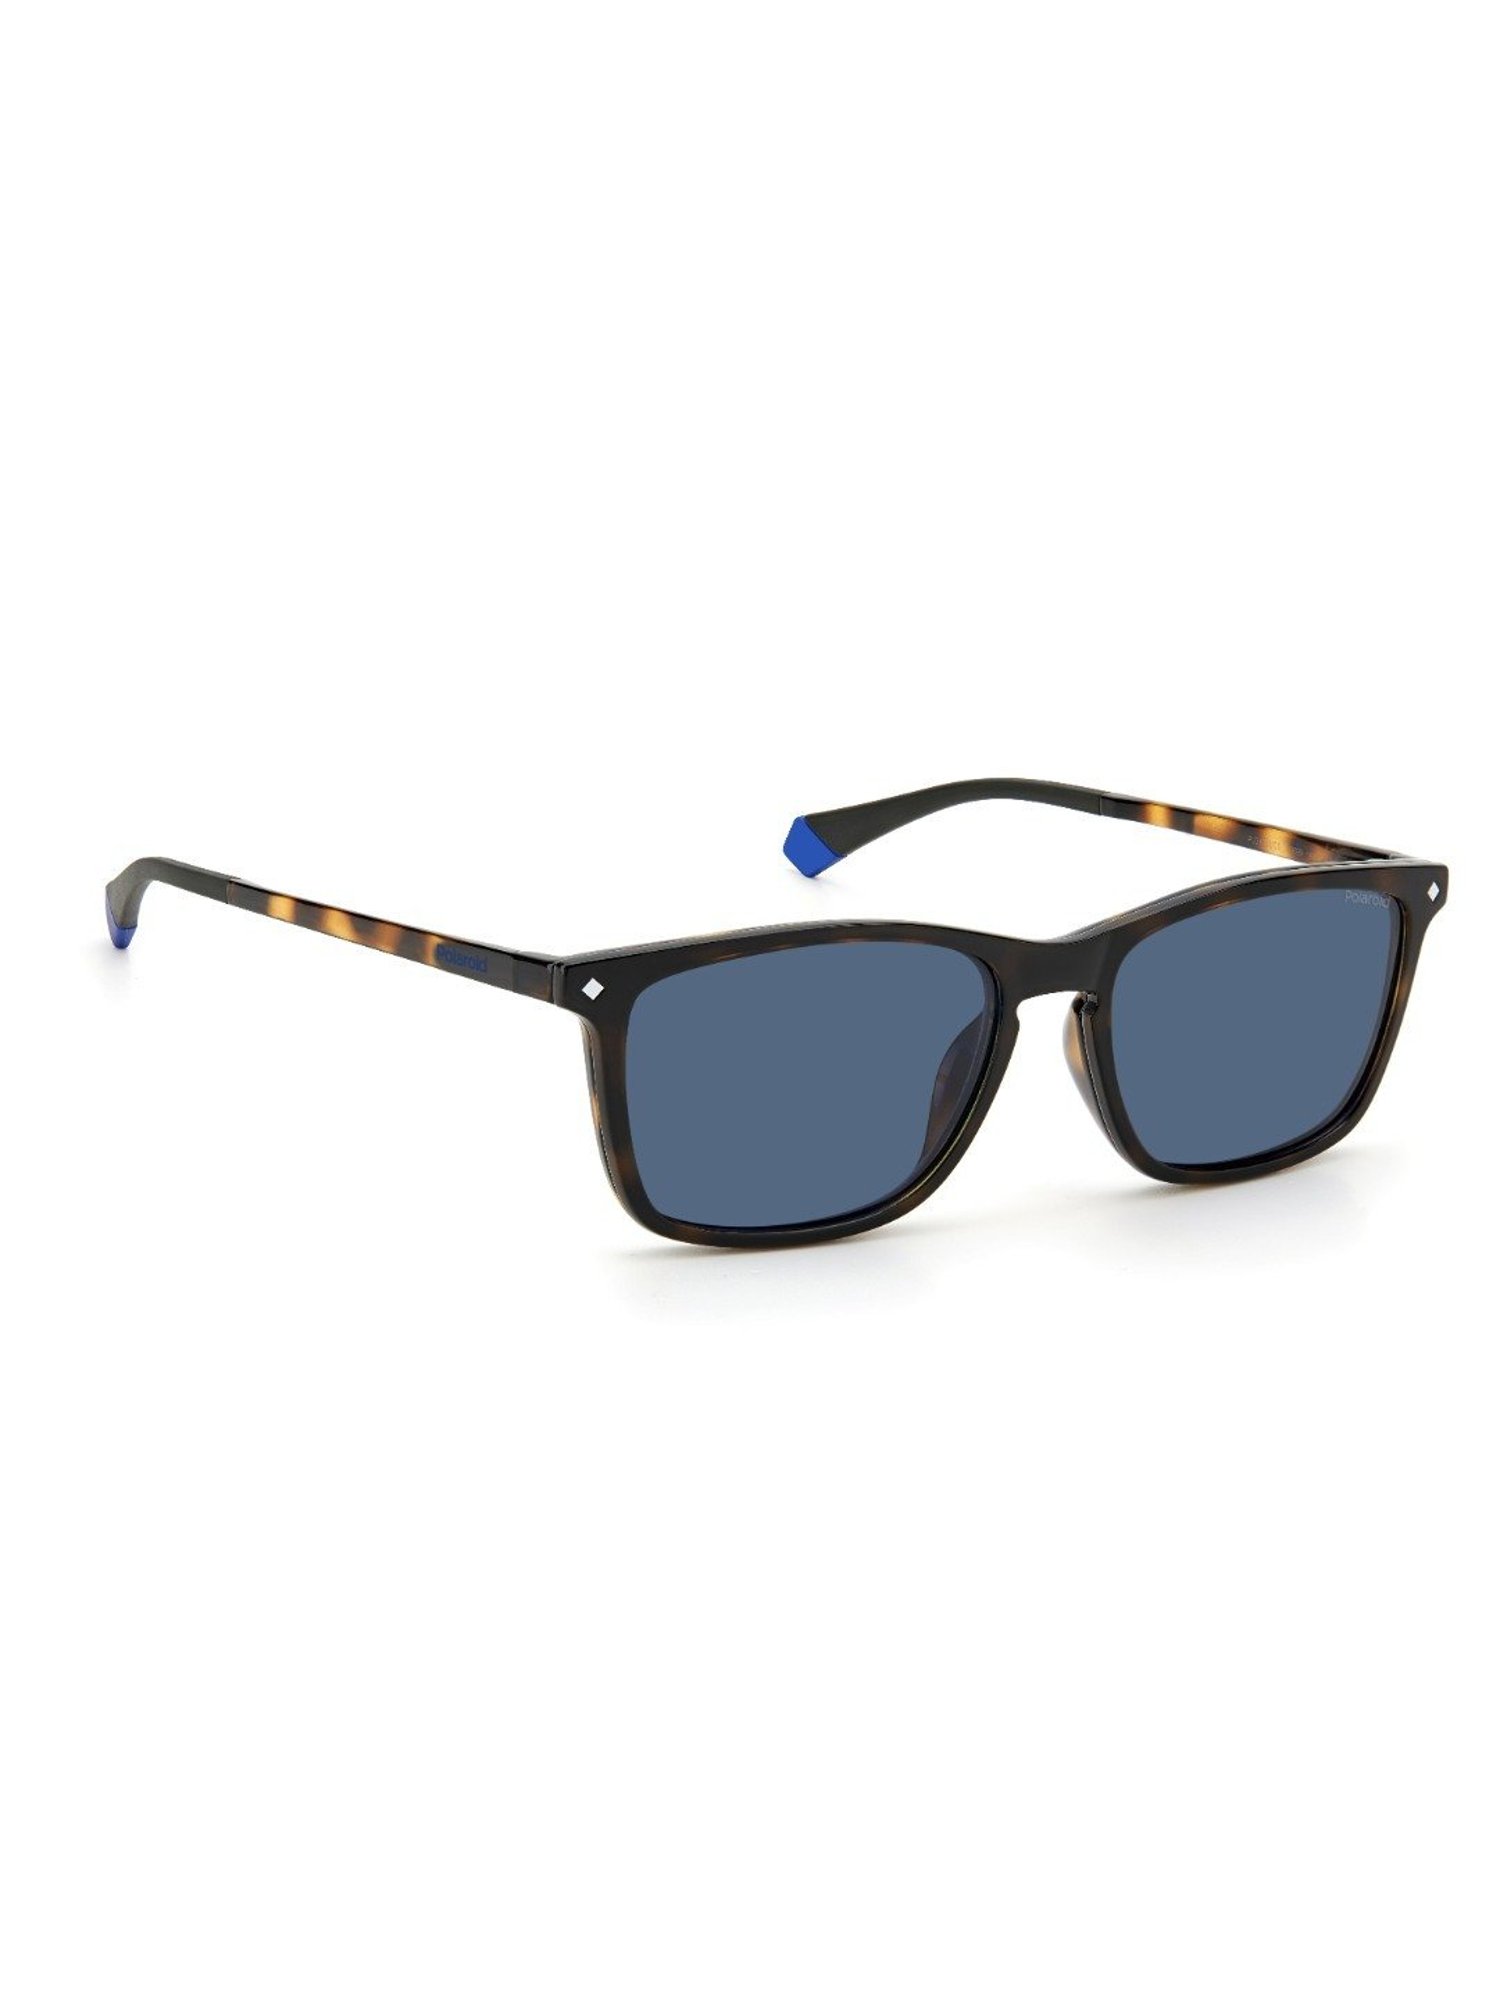 POLAROID PLD 6017/S ZDIPW 60mm Polarized Sunglasses Shades Eyewear Frames -  New - GGV Eyewear